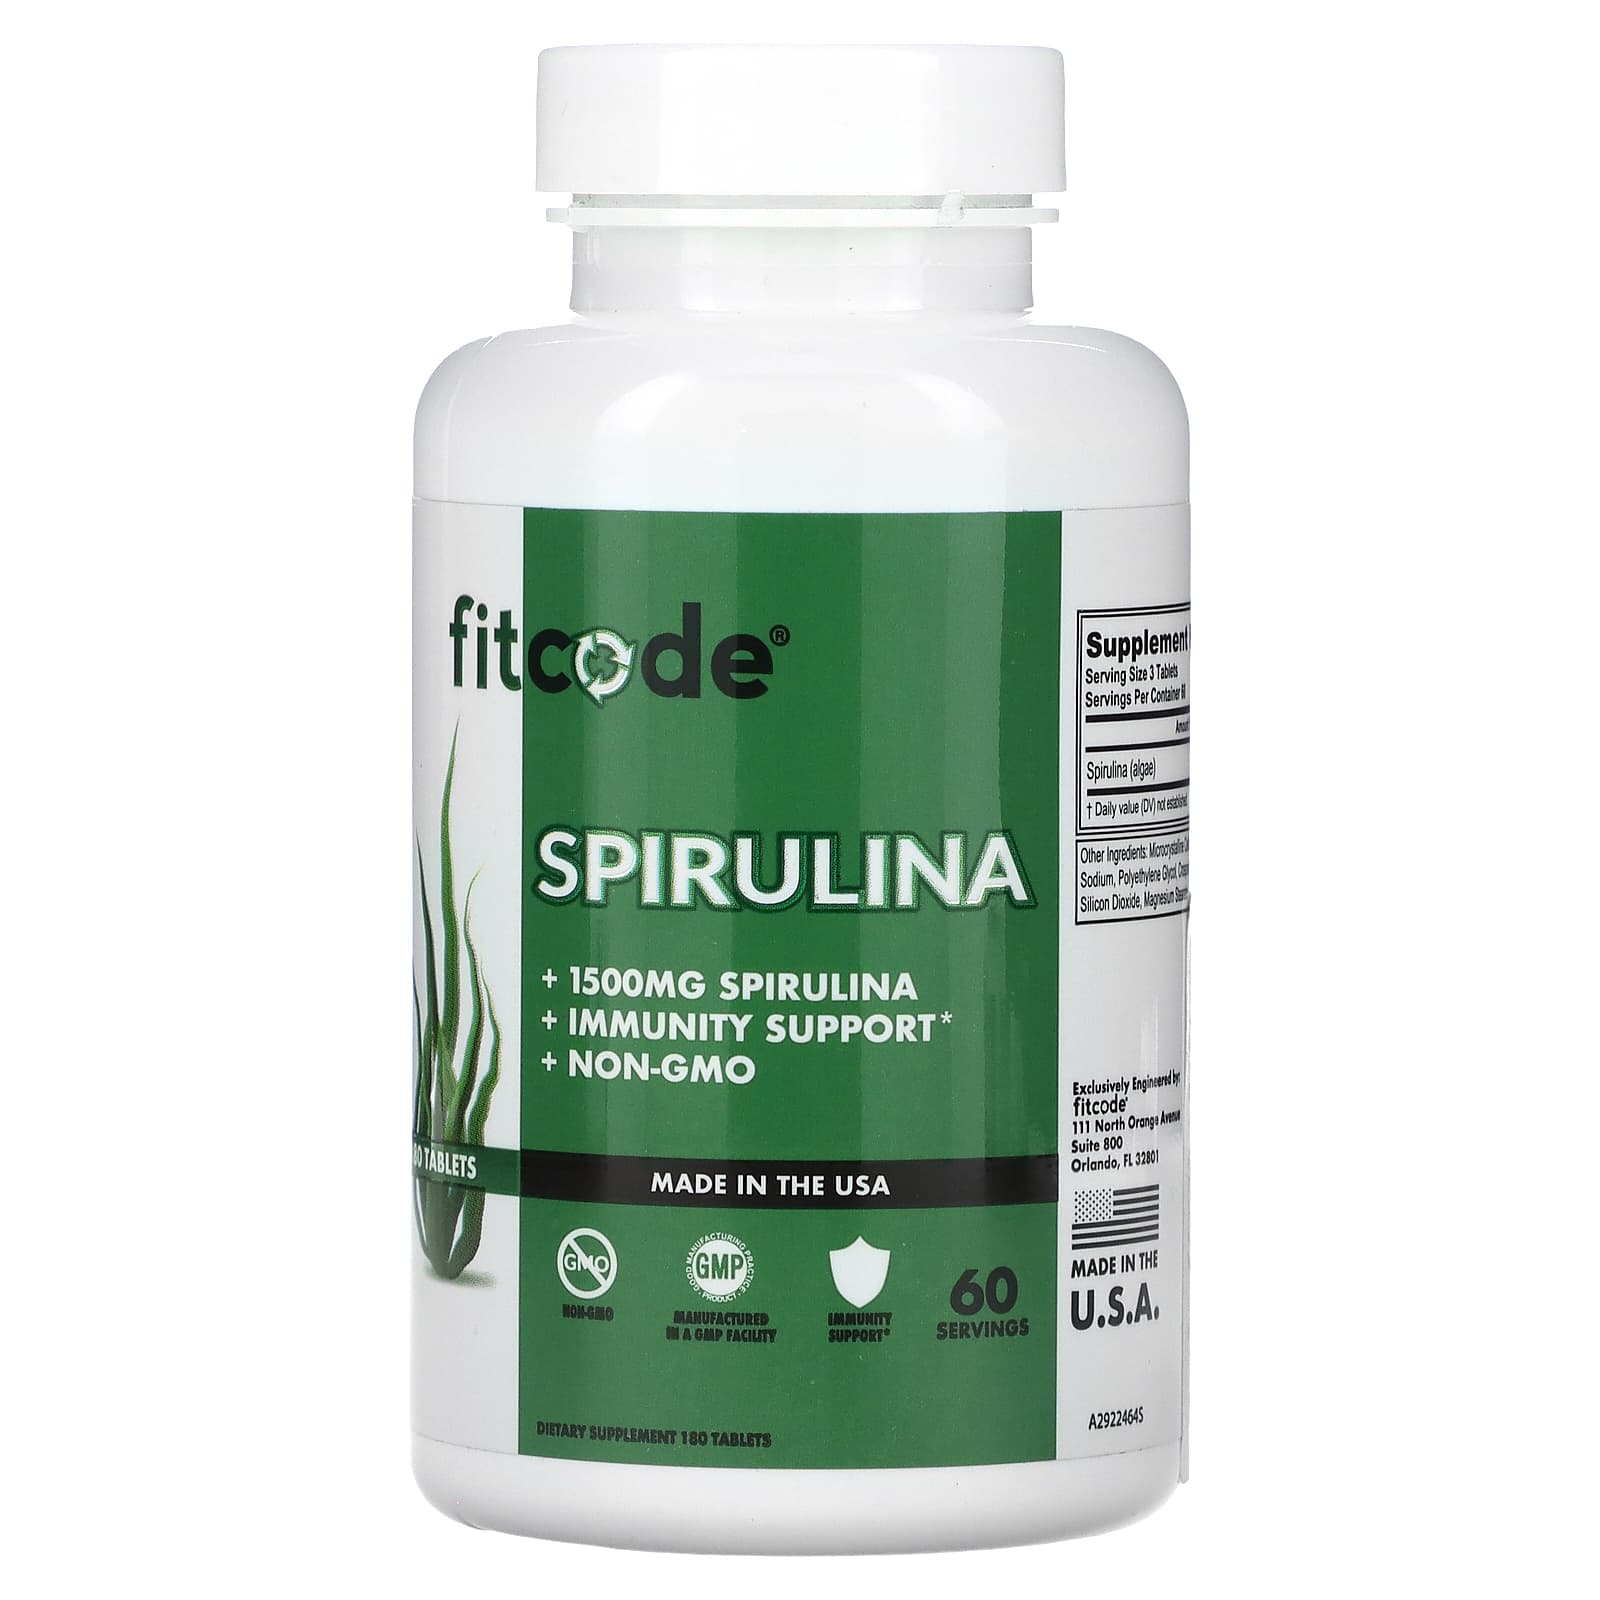 Espirulina, Intersa, 500 mg, 180 Comprimidos